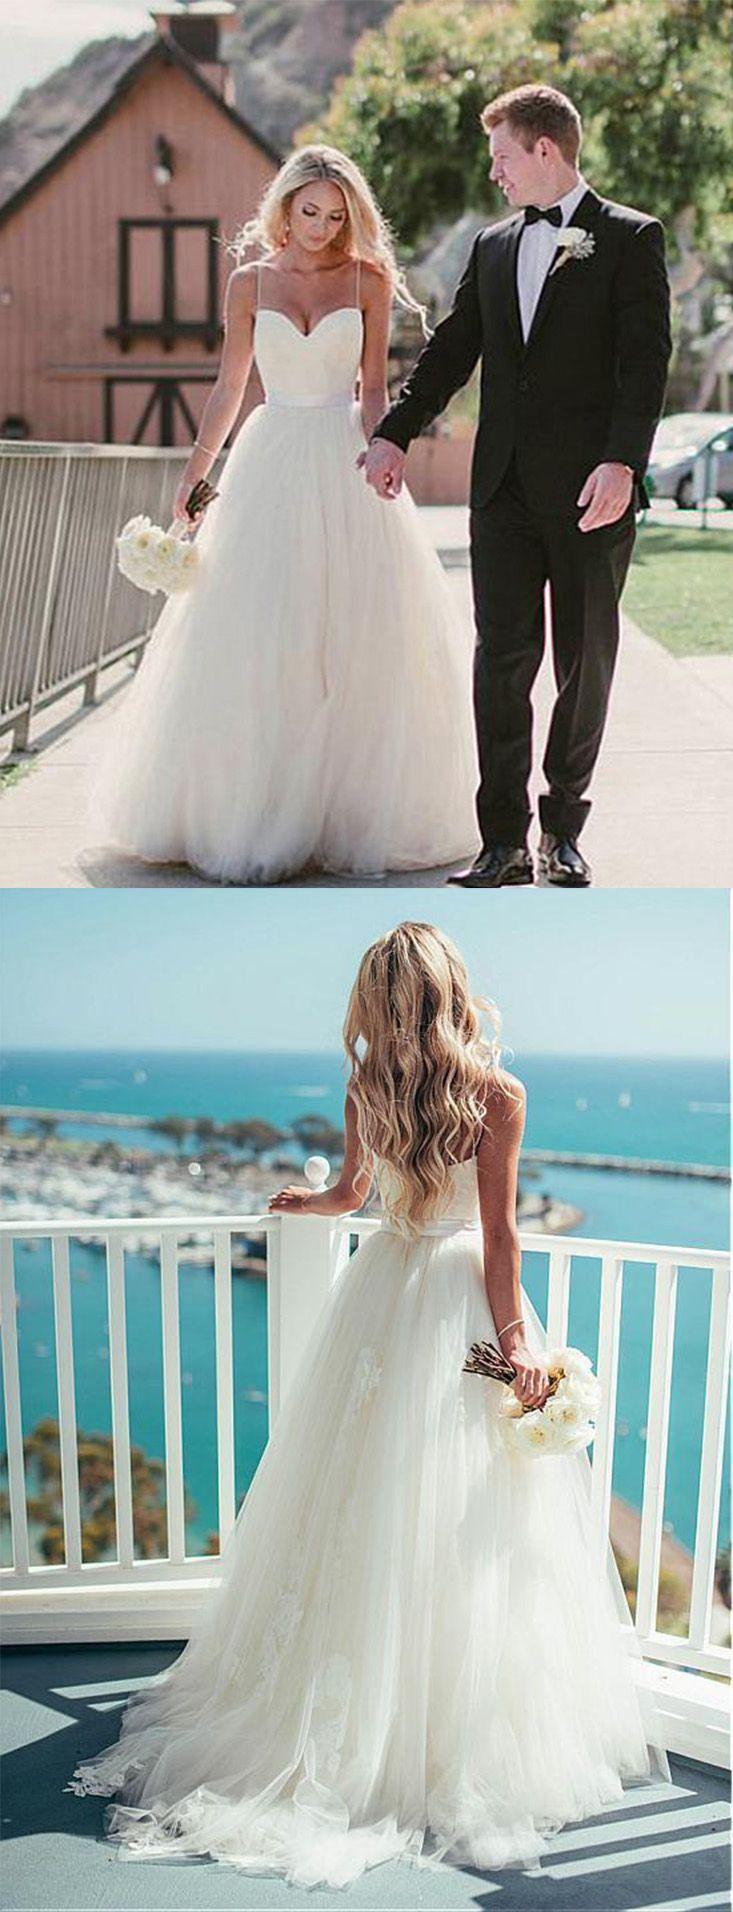 زفاف - Pretty Wedding Dresses,Spaghetti Straps A-line Tulle Ivory Wedding Dresses,Summer Wedding Dresses,Beach Wedding Dresses,2018 Bridal Gown From SIMIBRIDALDRESS